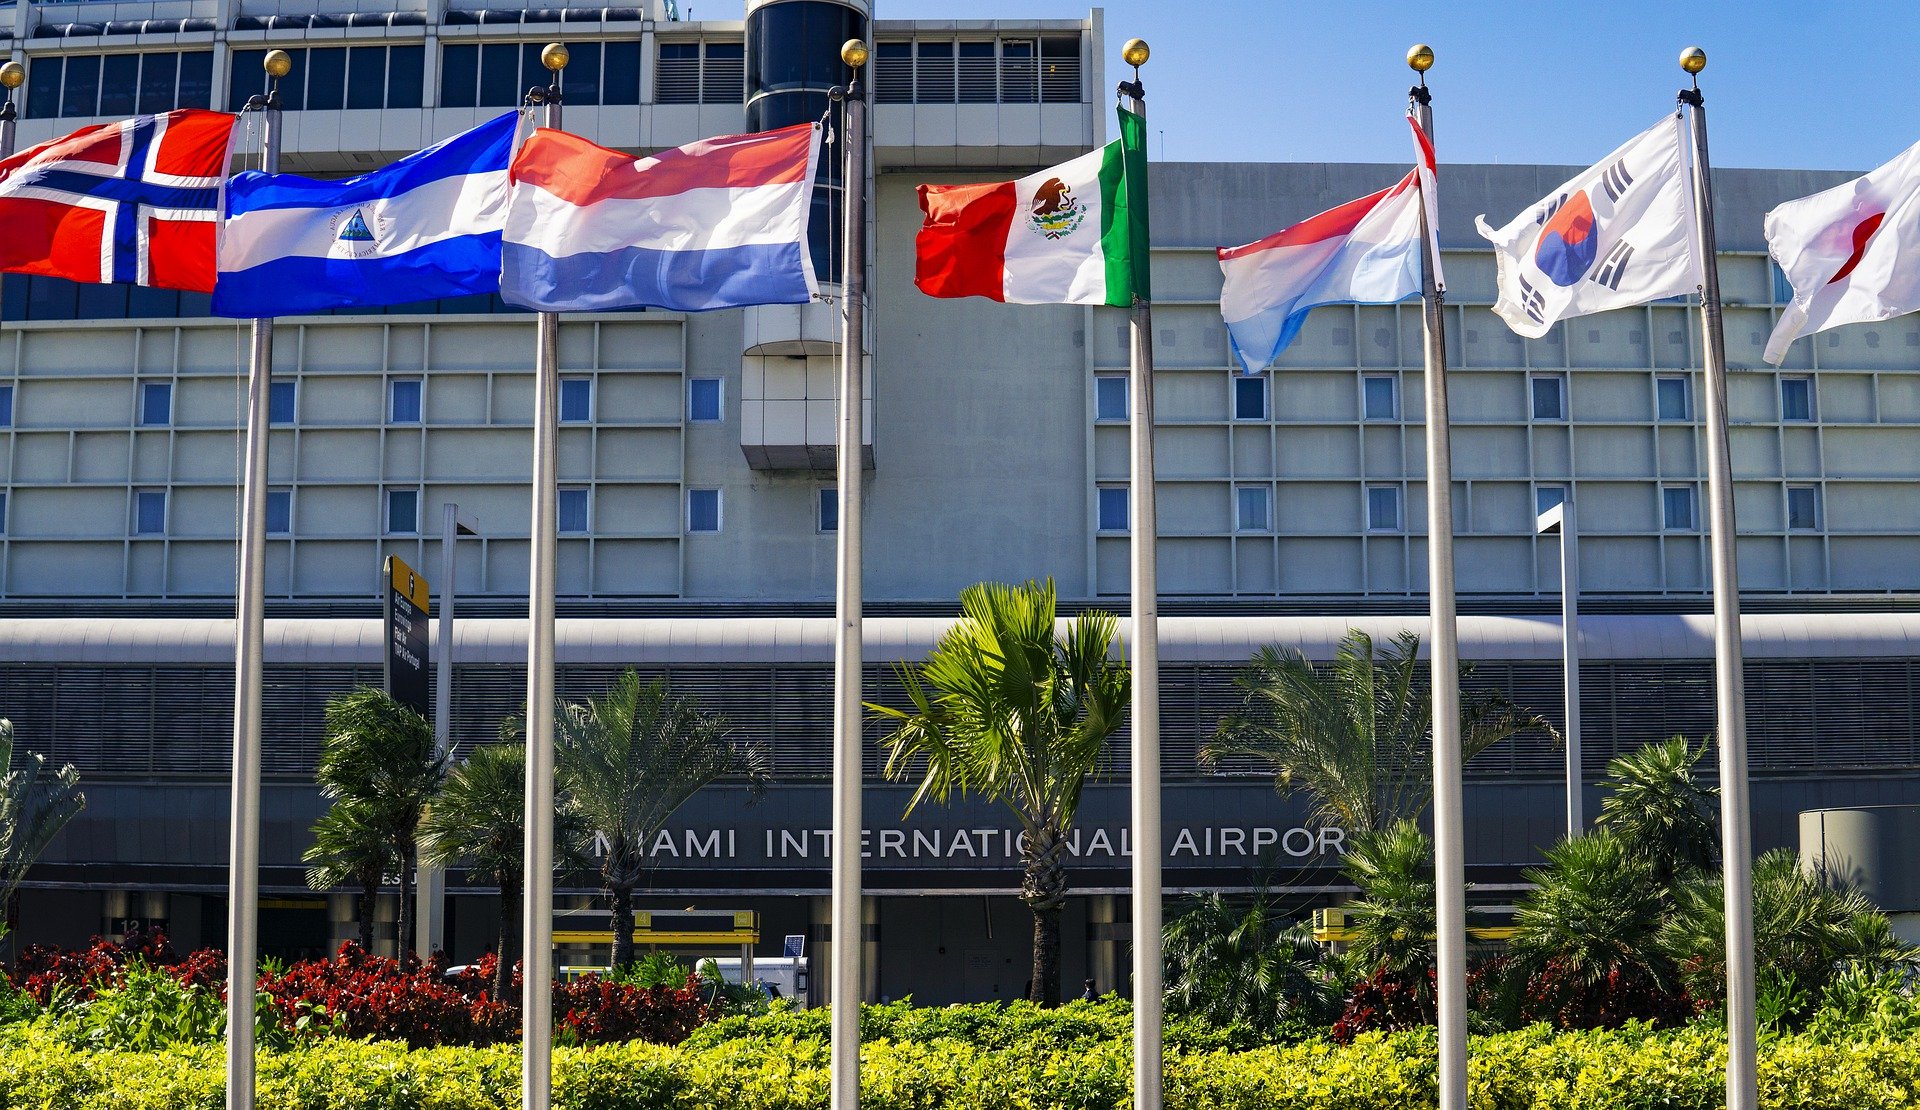 The entrance of Miami International Airport. | Photo: Pixabay/Joshua Woroniecki 